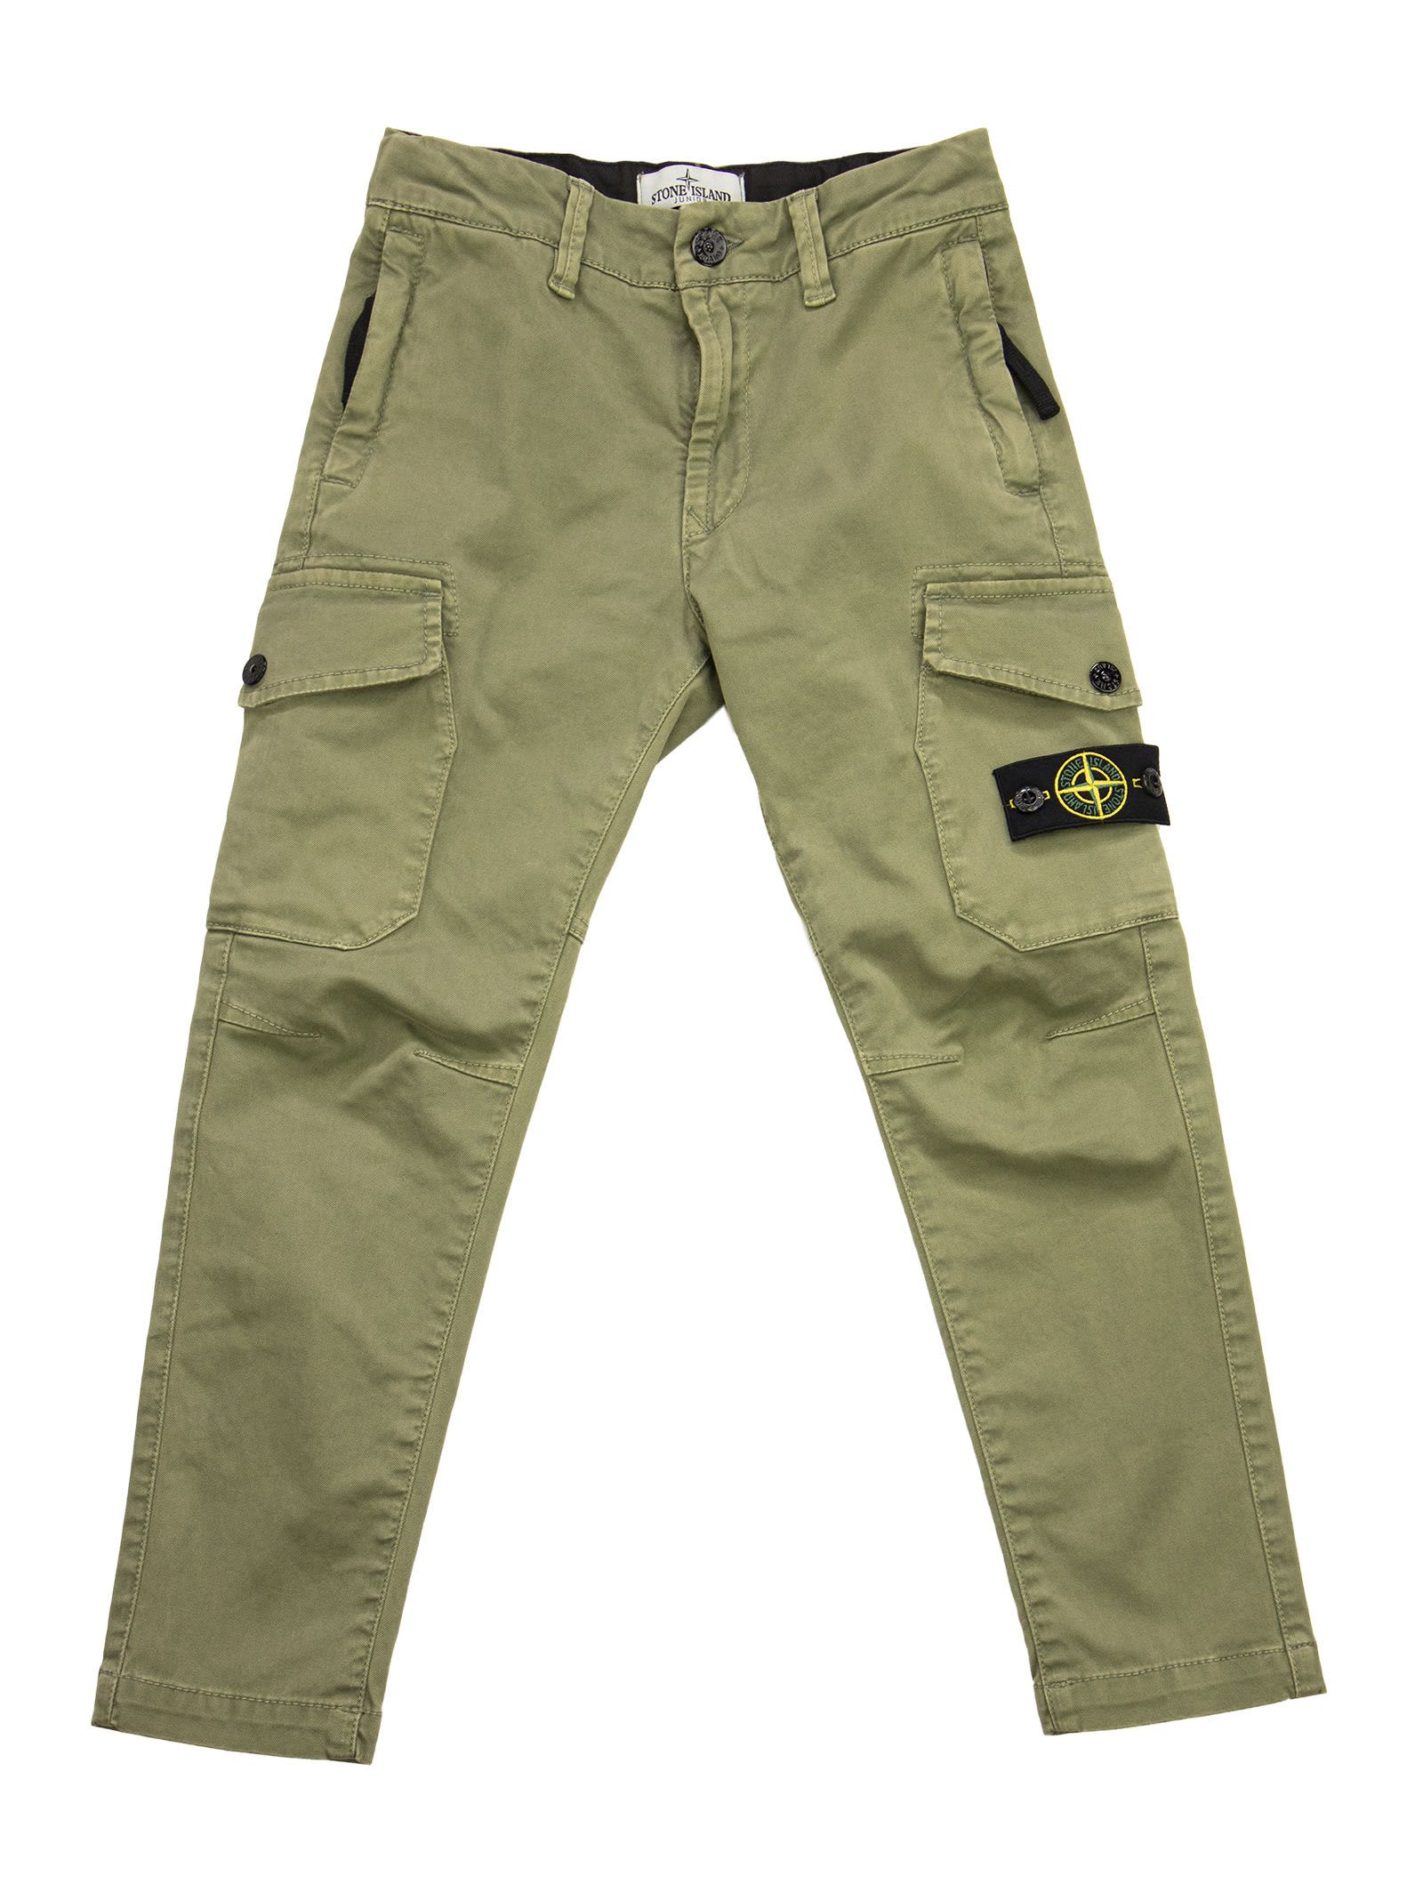 Cargo trousers with Stone Island badge - Bellettini.com